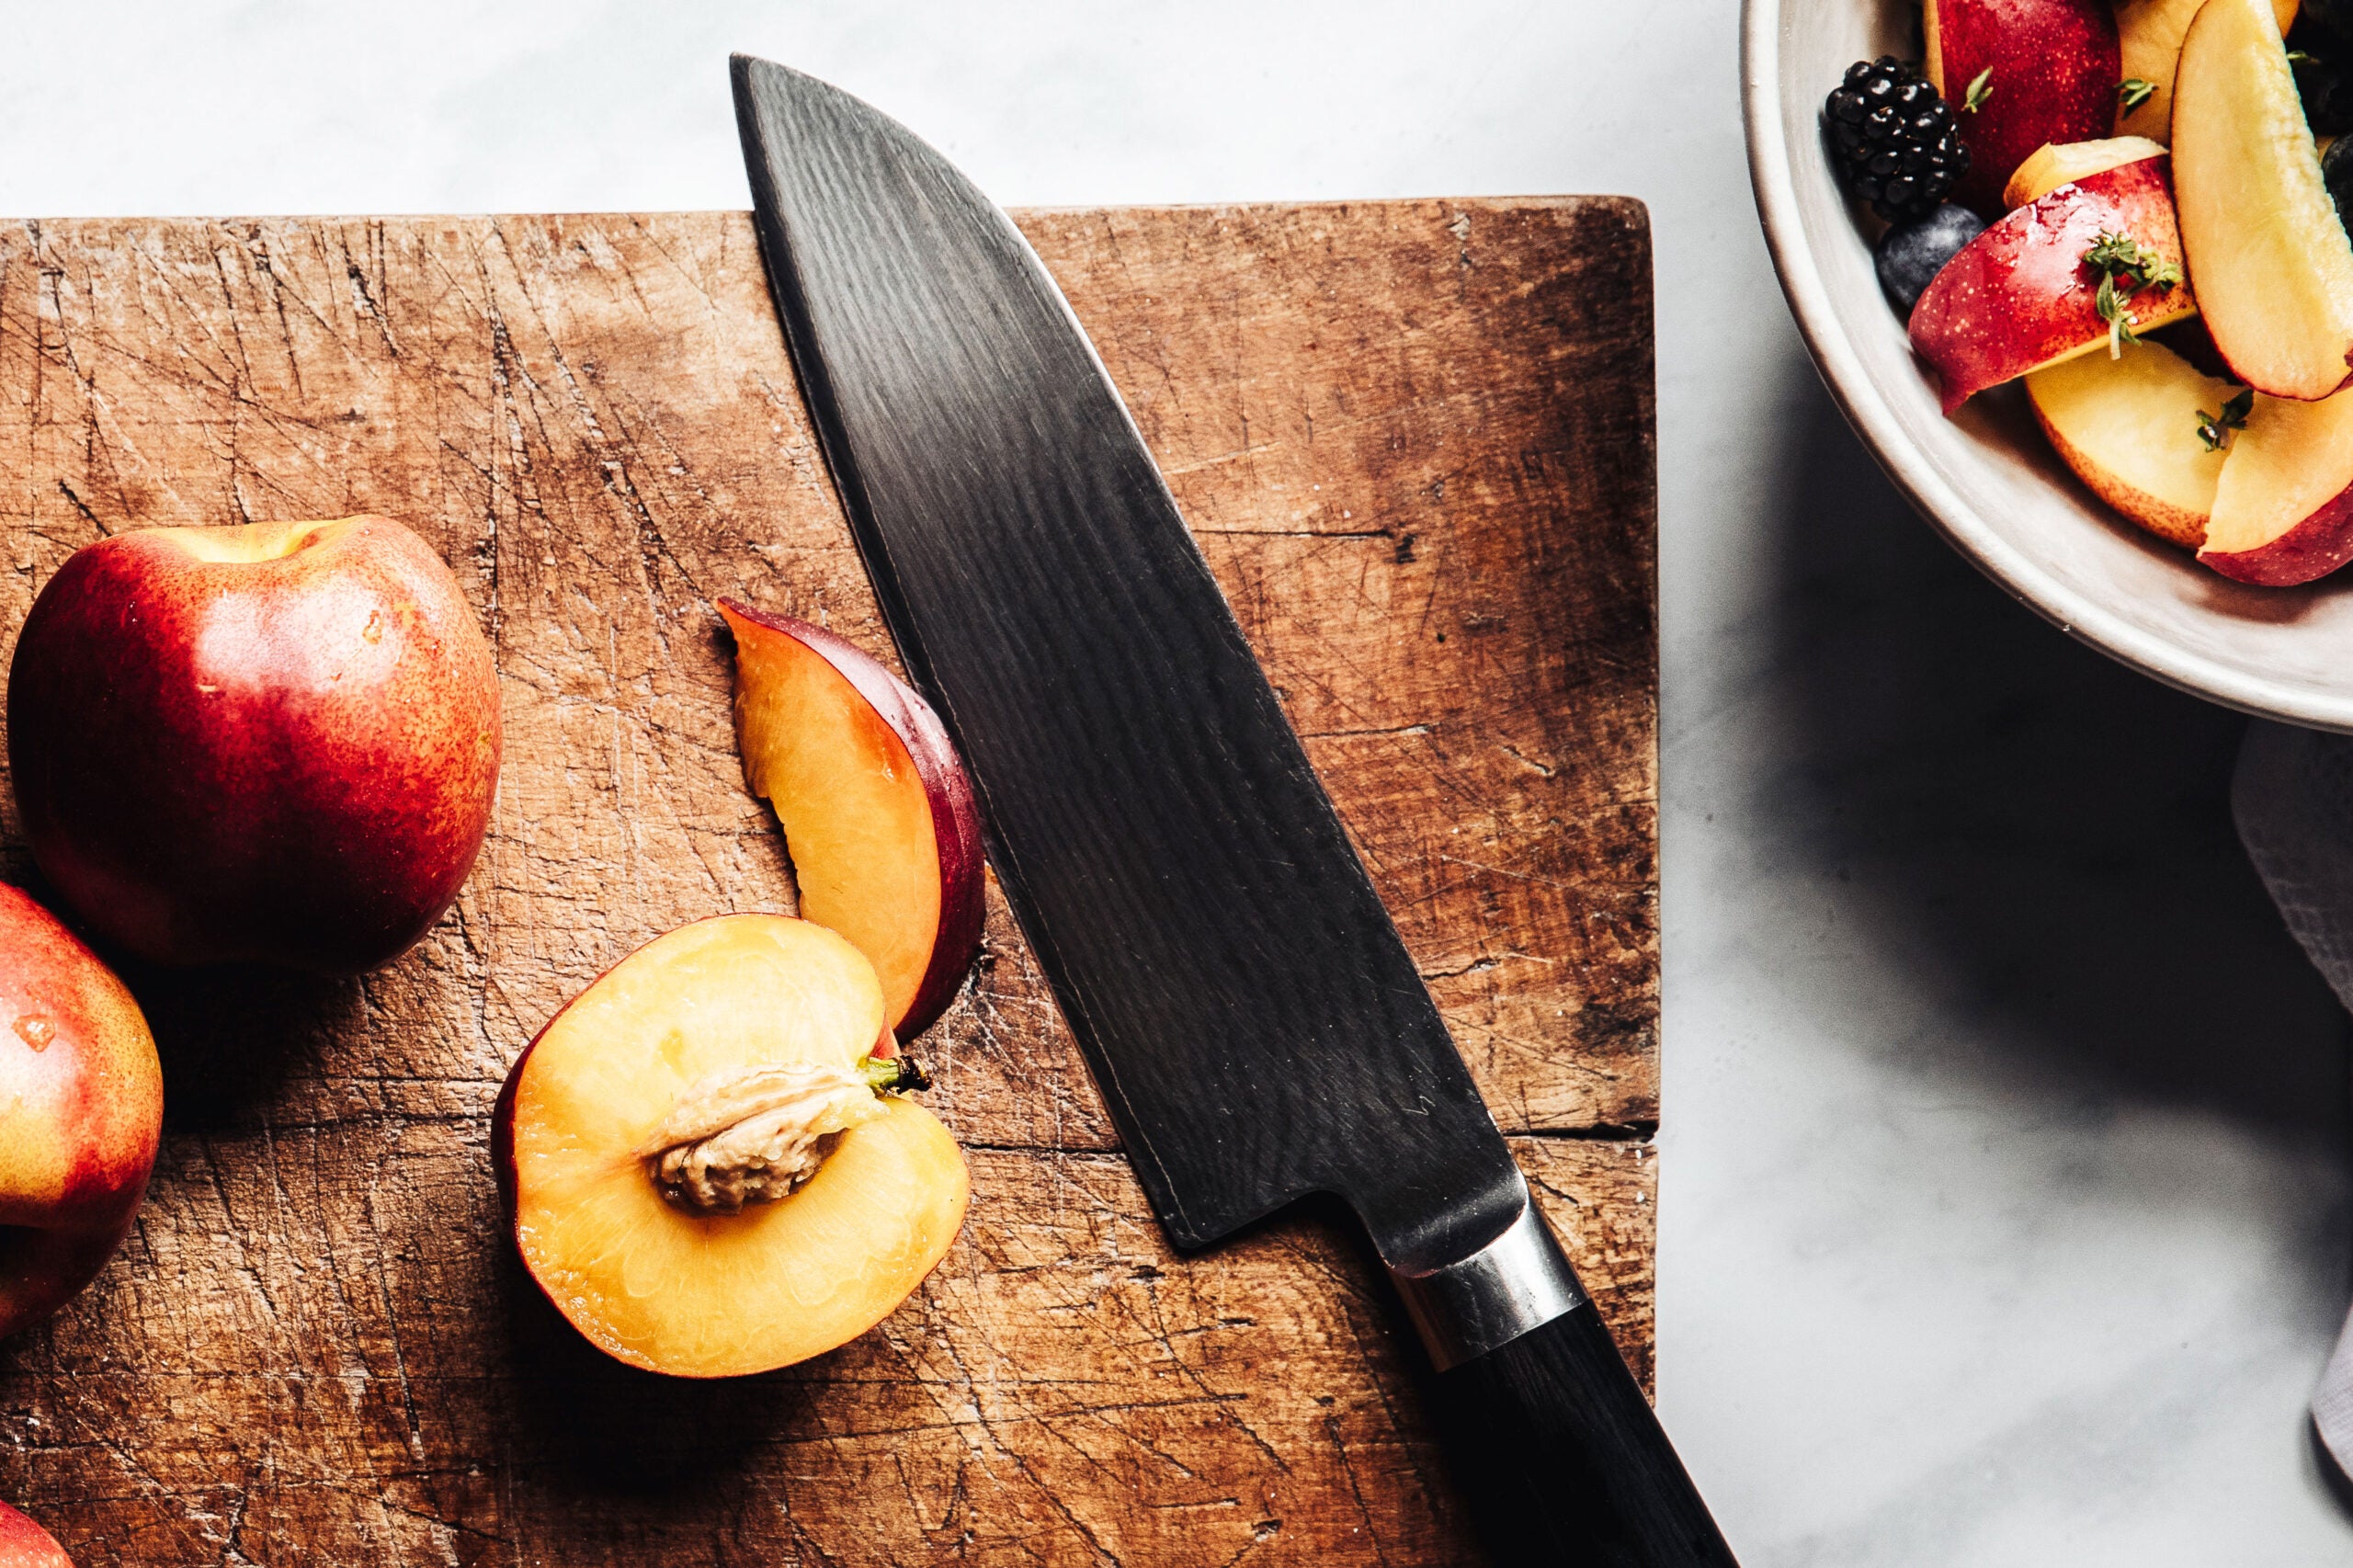 Wusthof Electric Knife Sharpener - Easy Edge for Kitchen & Chef Knives